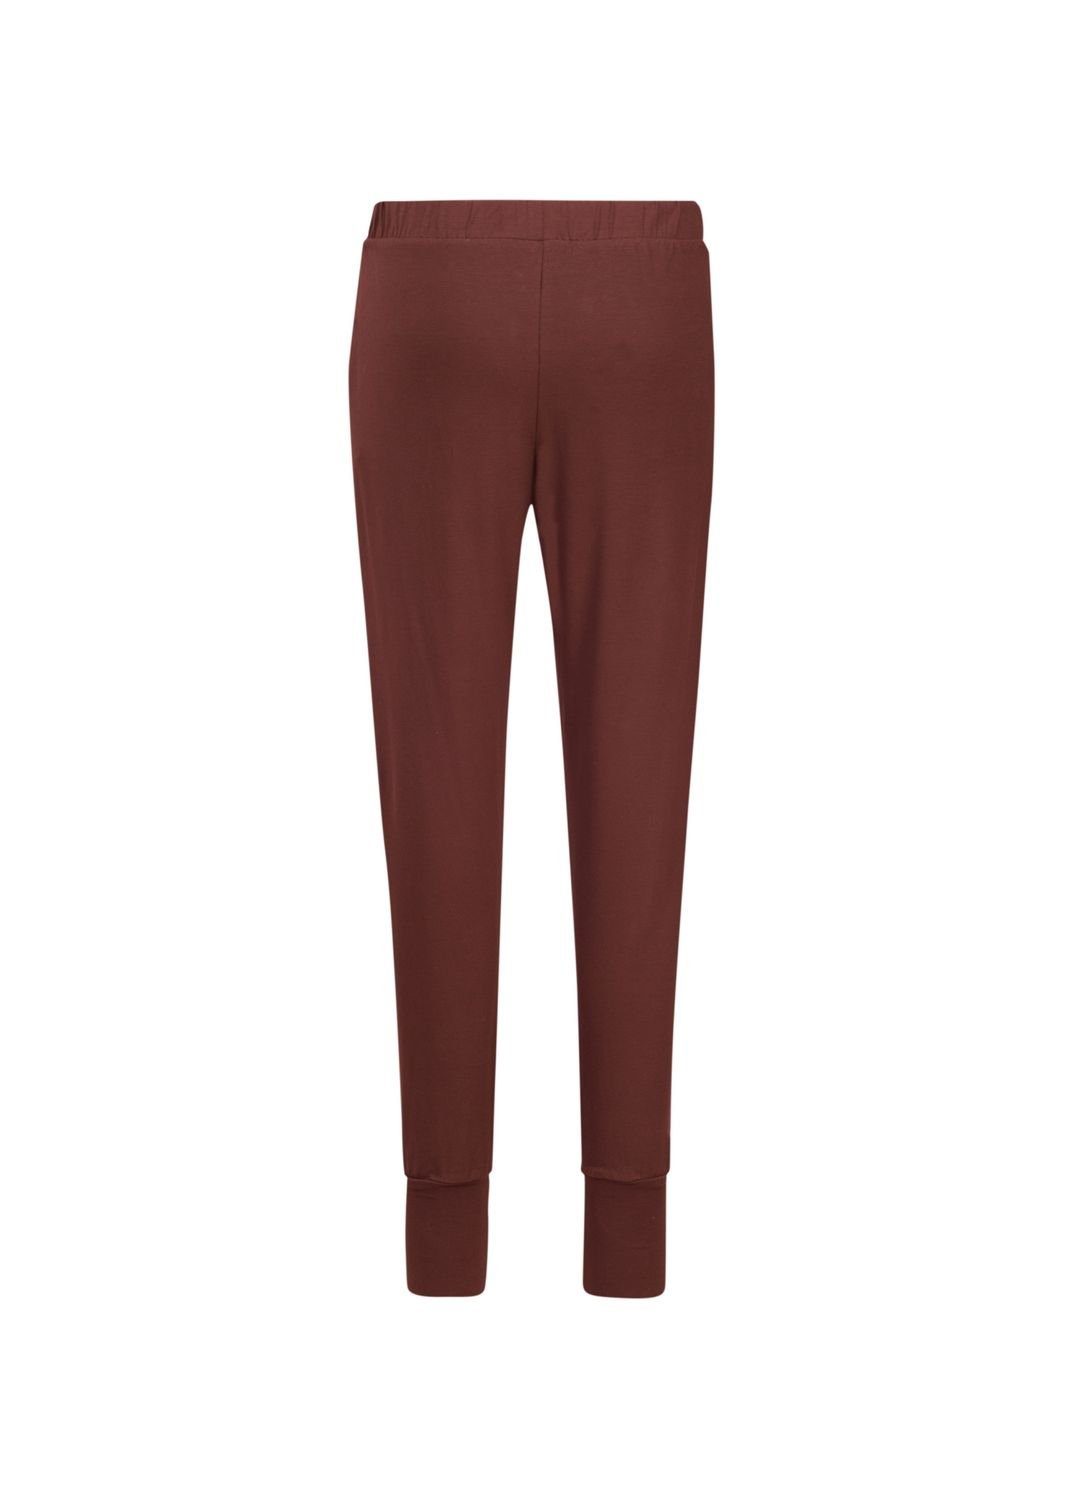 PiP Studio Schlafanzug PiP Studio Long Damen Bobien lange Pyjamahose Schlafhose Sleepwear Brown-Red Trouserr Loungewear